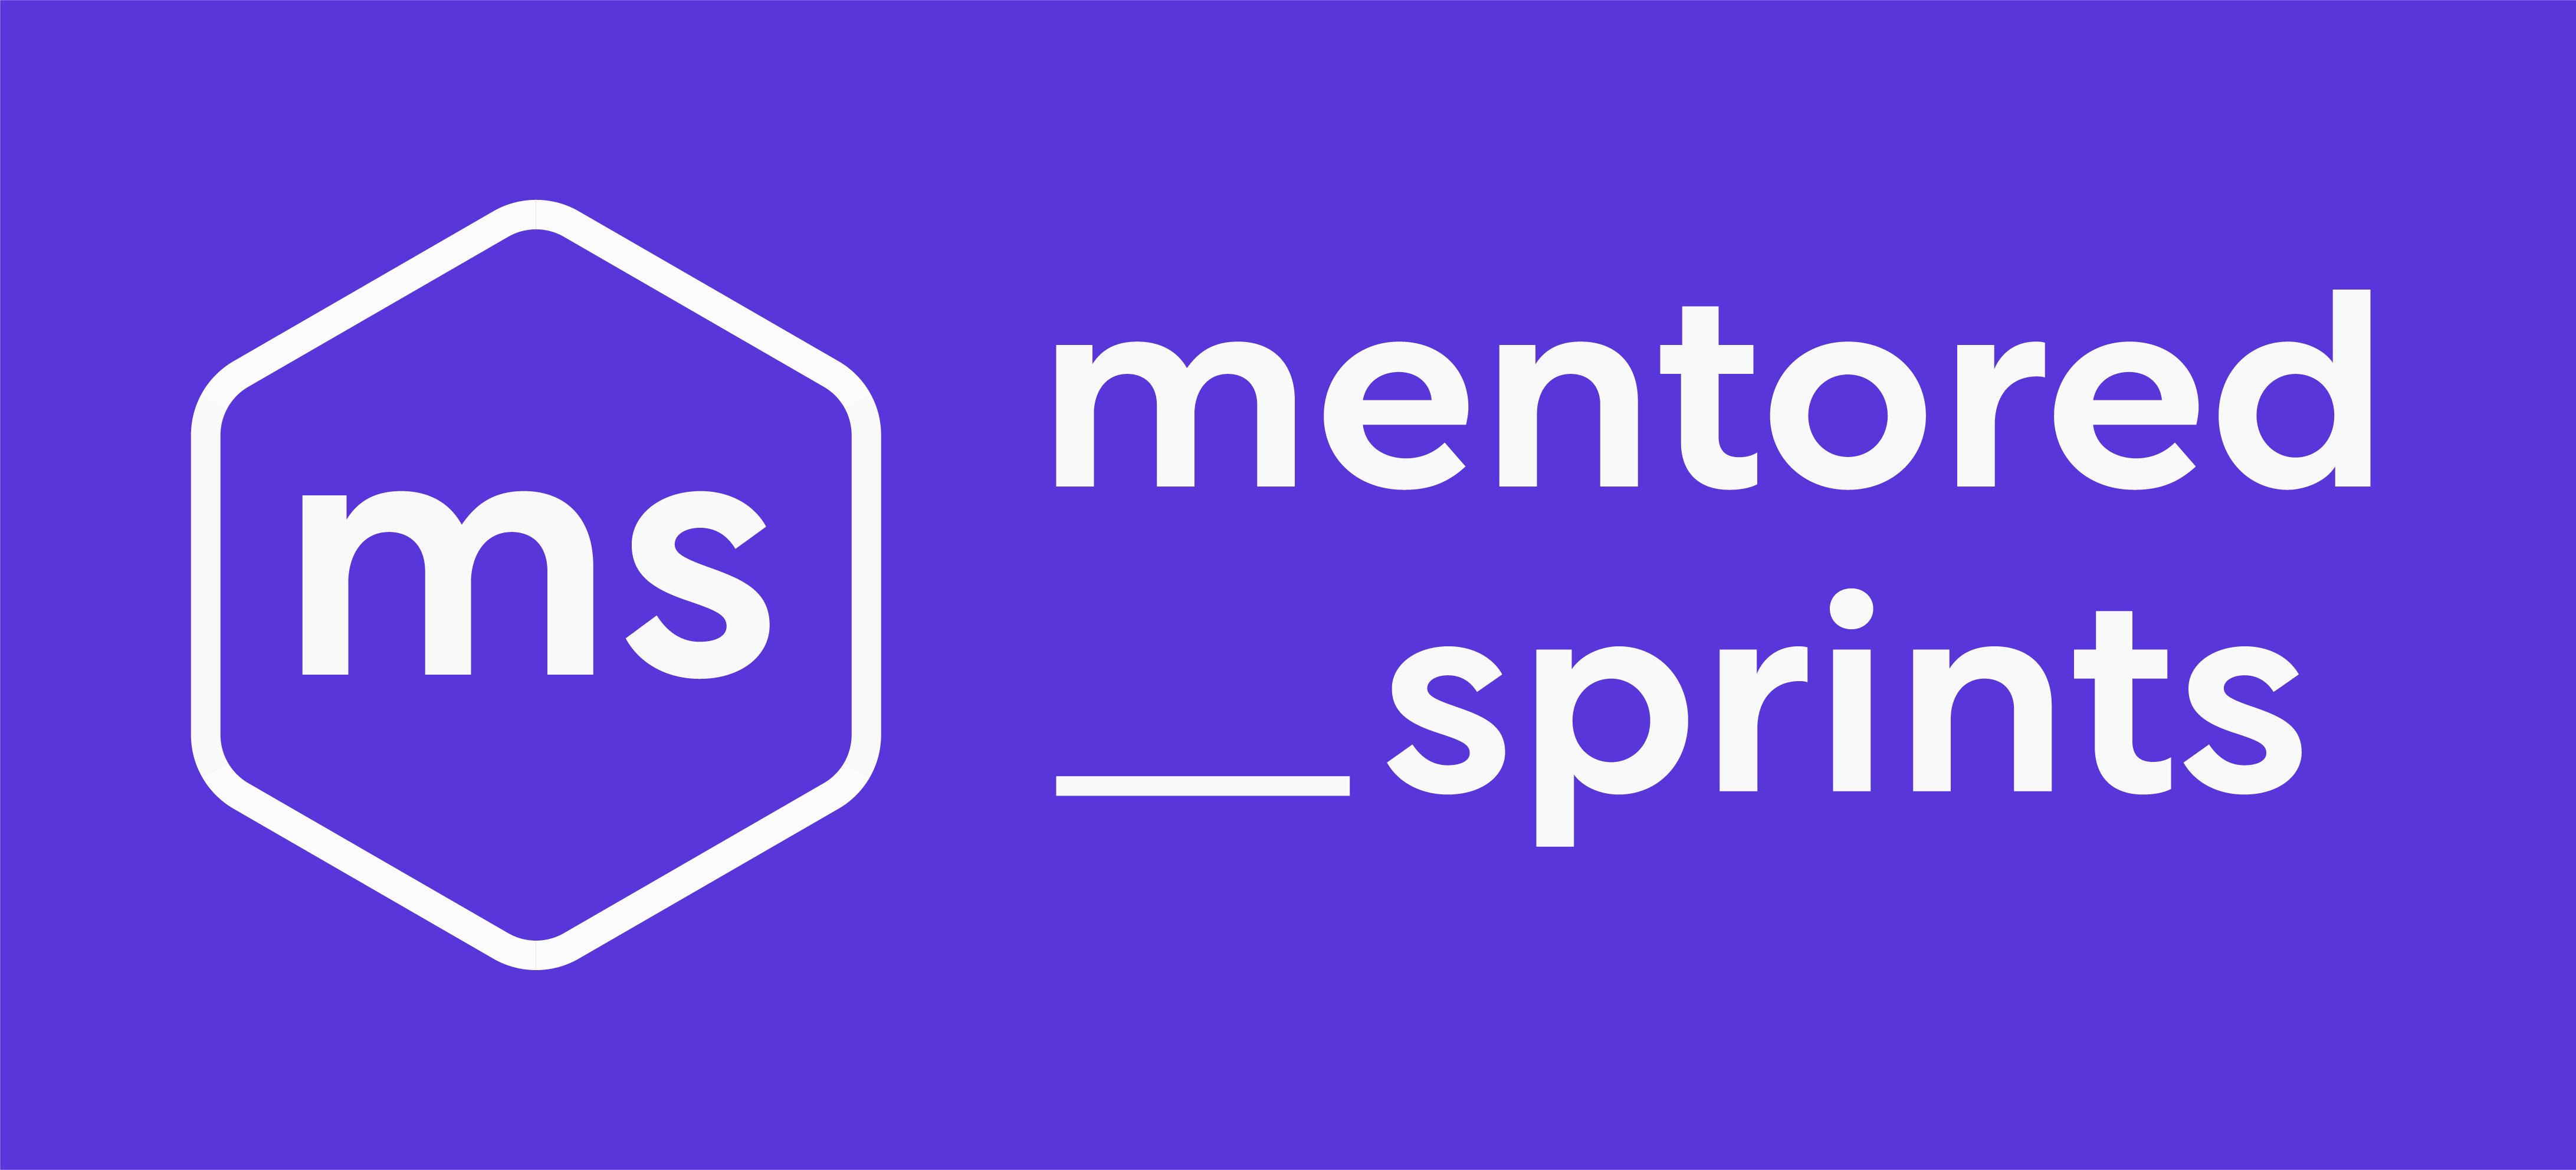 Mentored Sprints alt logo